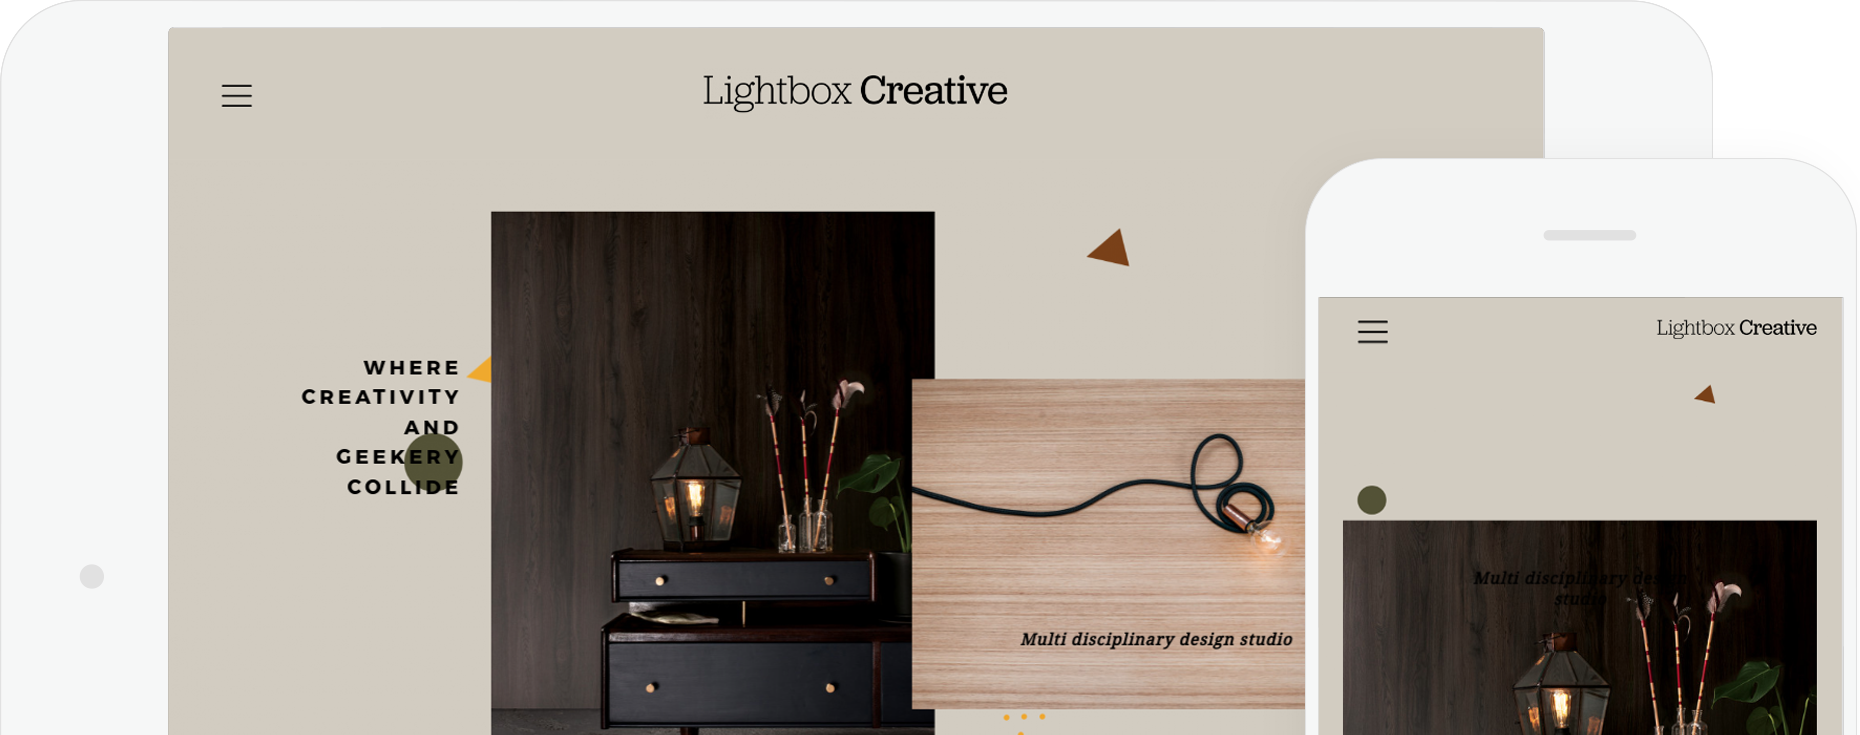 Lightbox Creative